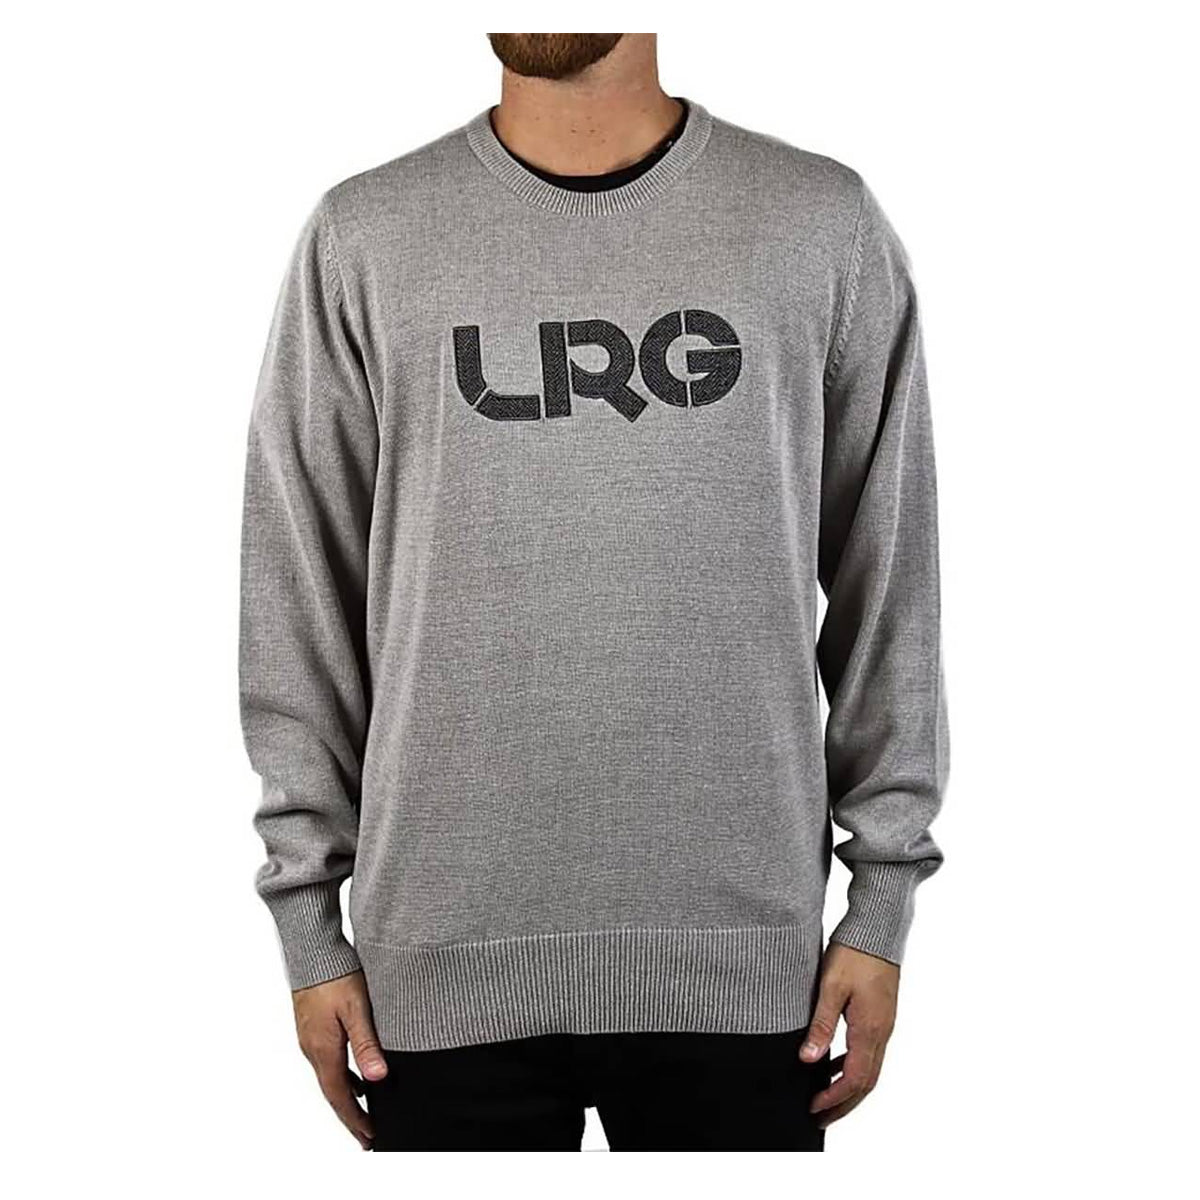 
LRG Survivalist Men's Sweater Sweatshirts 